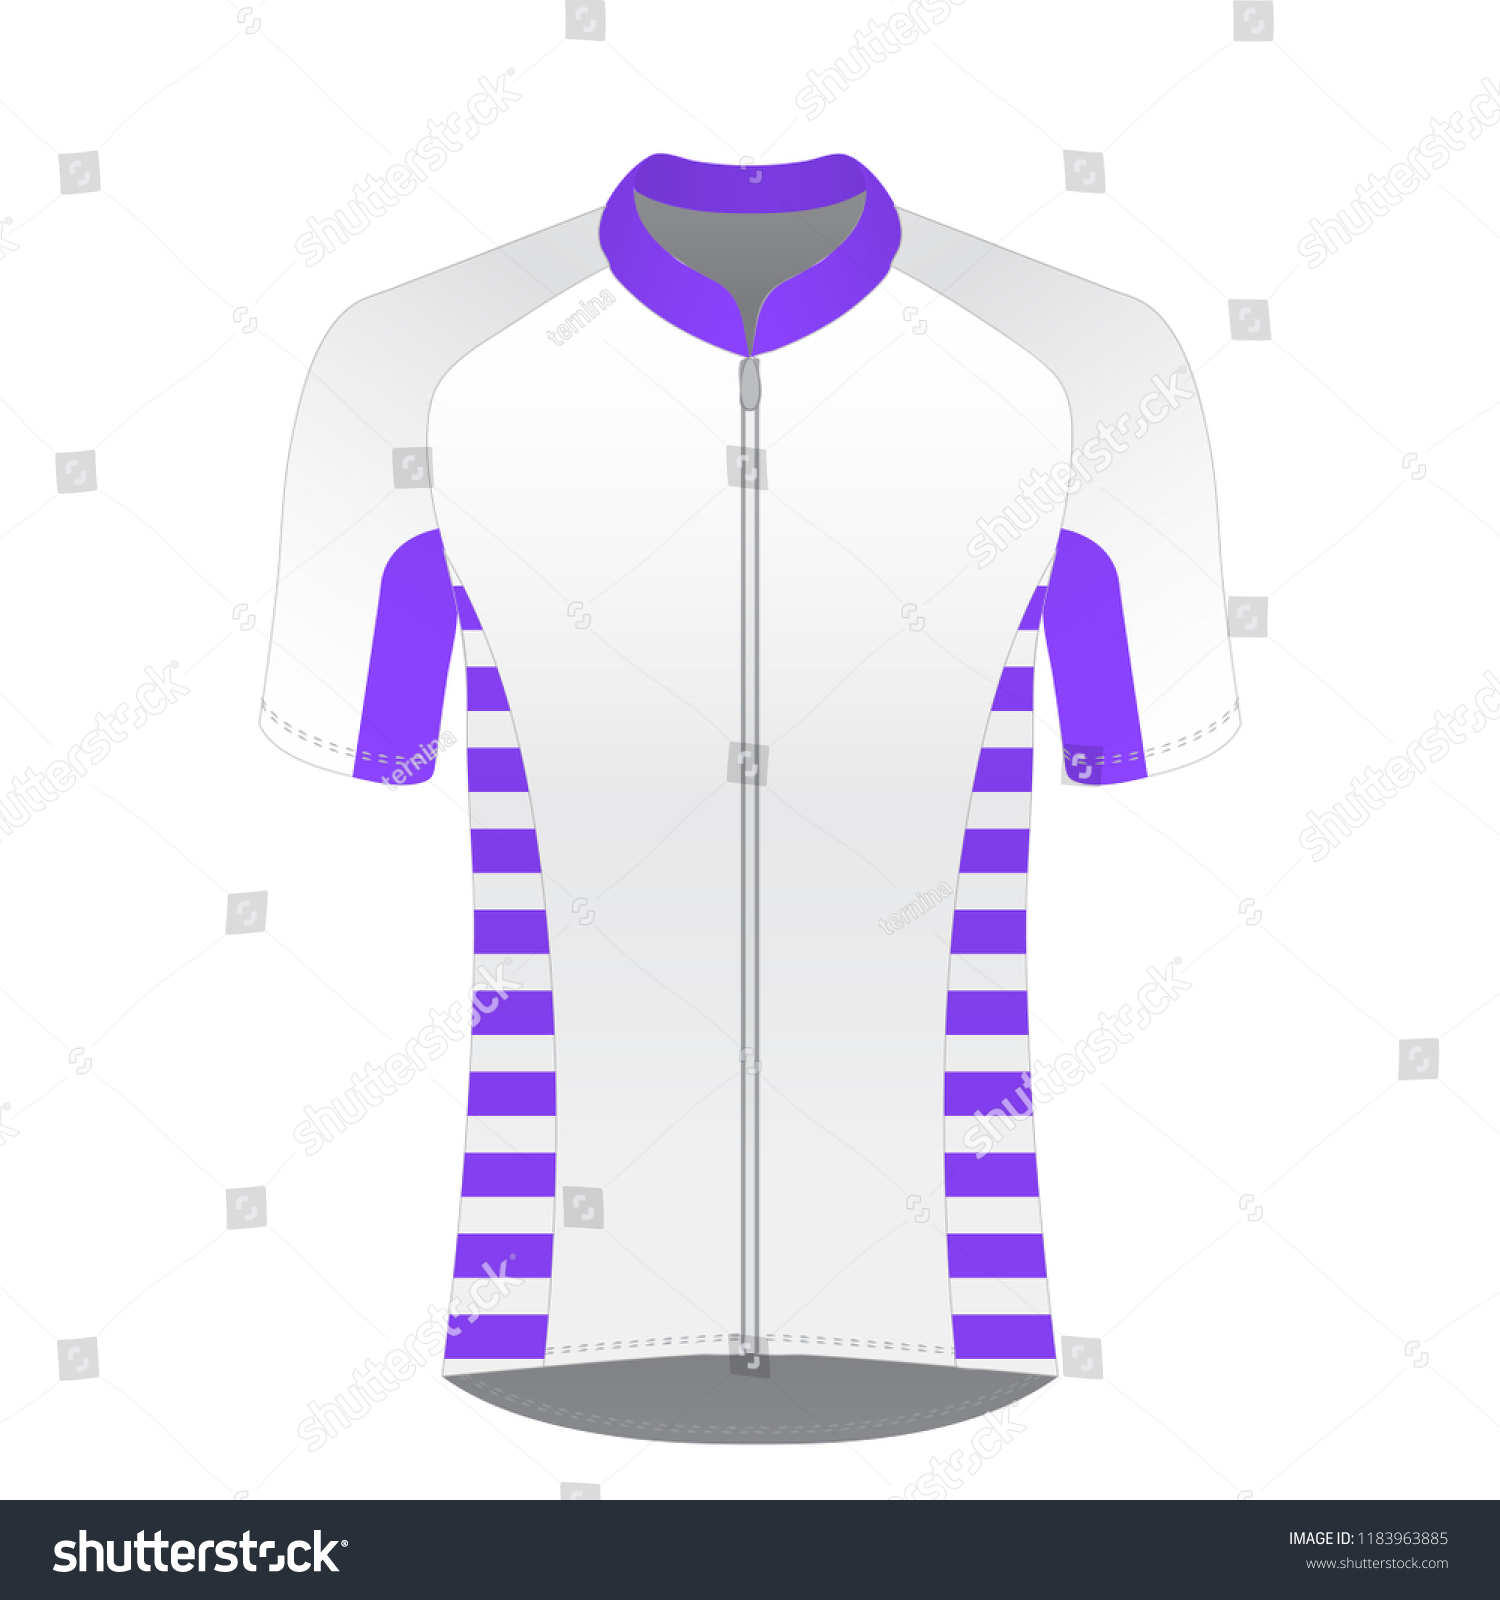 Cycling Jersey Mockup Tshirt Sport Design: Stock-Vektorgrafik With Blank Cycling Jersey Template